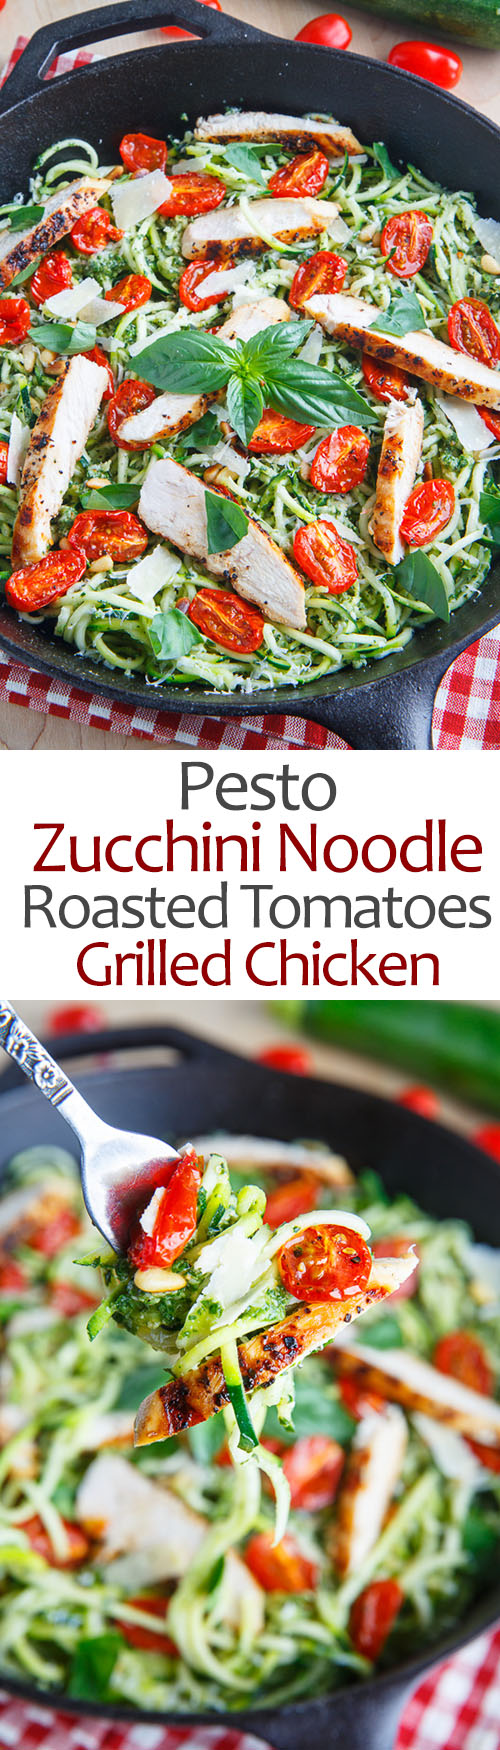 Chicken pesto zucchini noodles: Introducing OmieBox